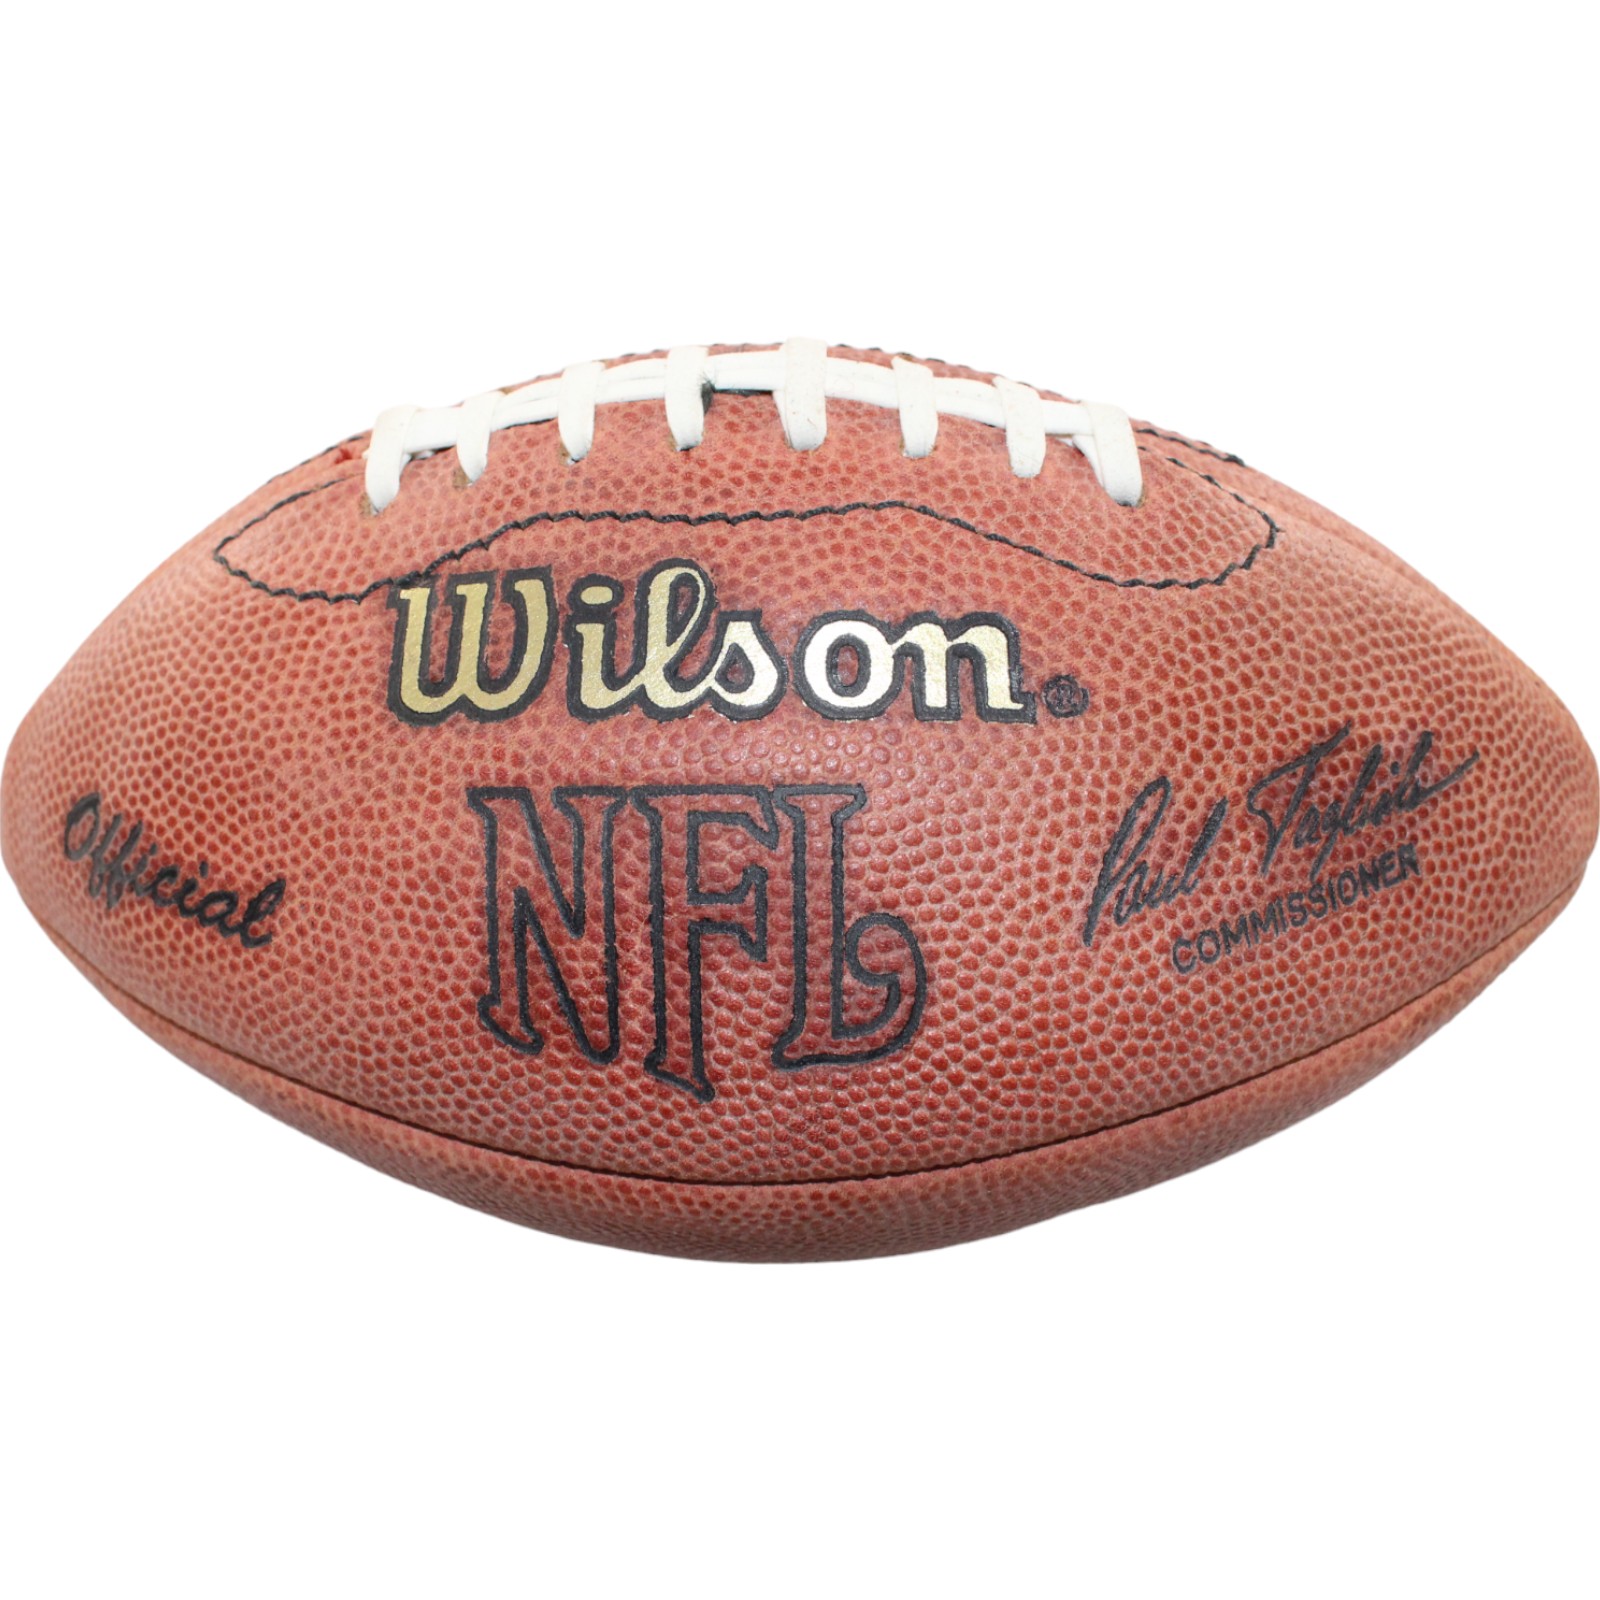 Simon Fletcher Autographed/Signed Wilson Leather Mini Football BAS 44309